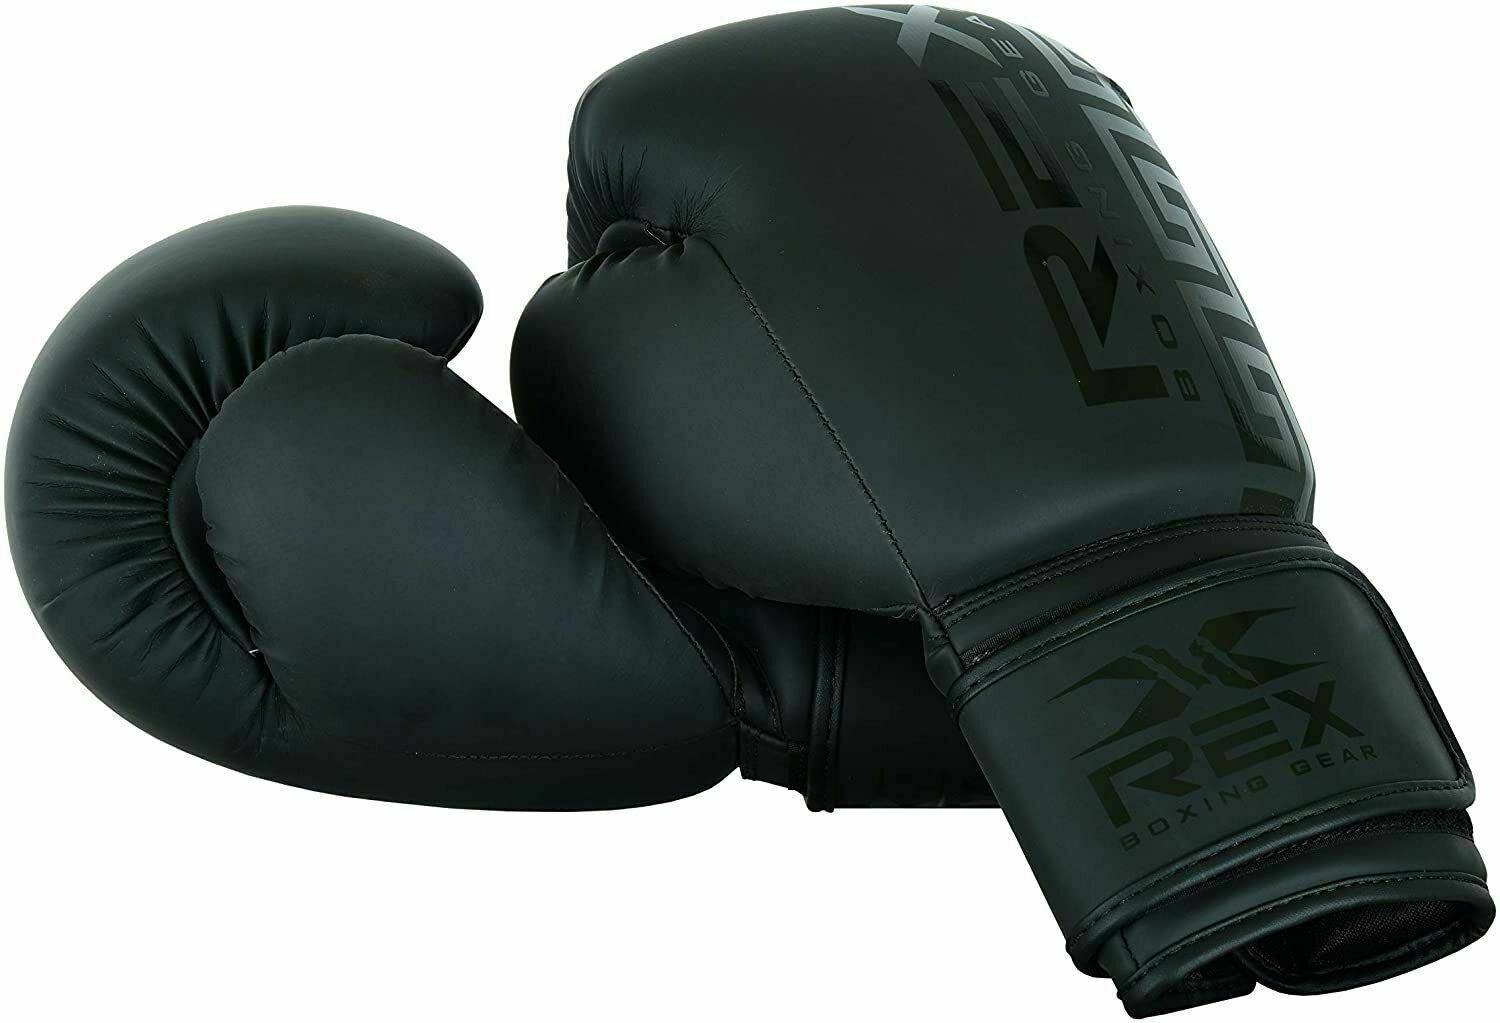 Boxing Gloves 12oz 1Training Gloves Adult Muay Thai MMA Gloves